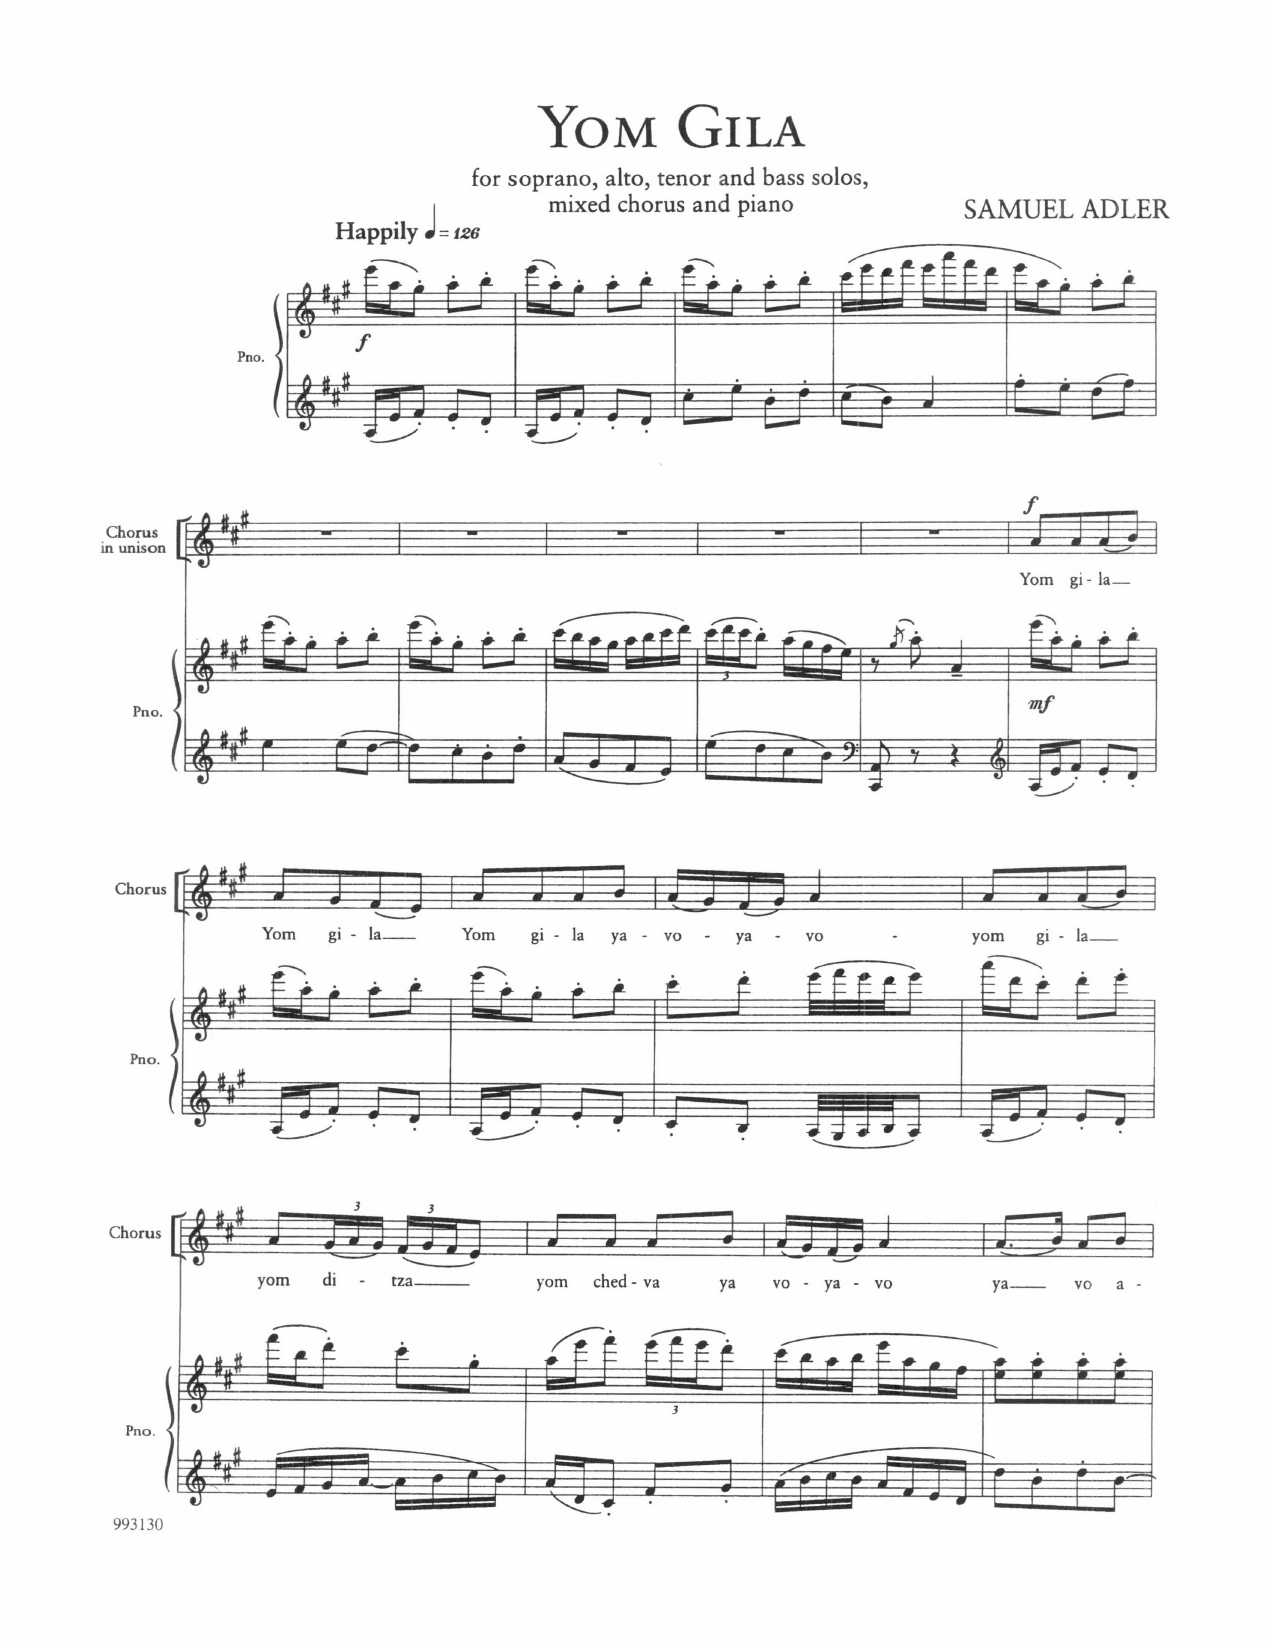 Samuel Adler Five Sephardic Choruses: Yom Gila Sheet Music Notes & Chords for SATB - Download or Print PDF